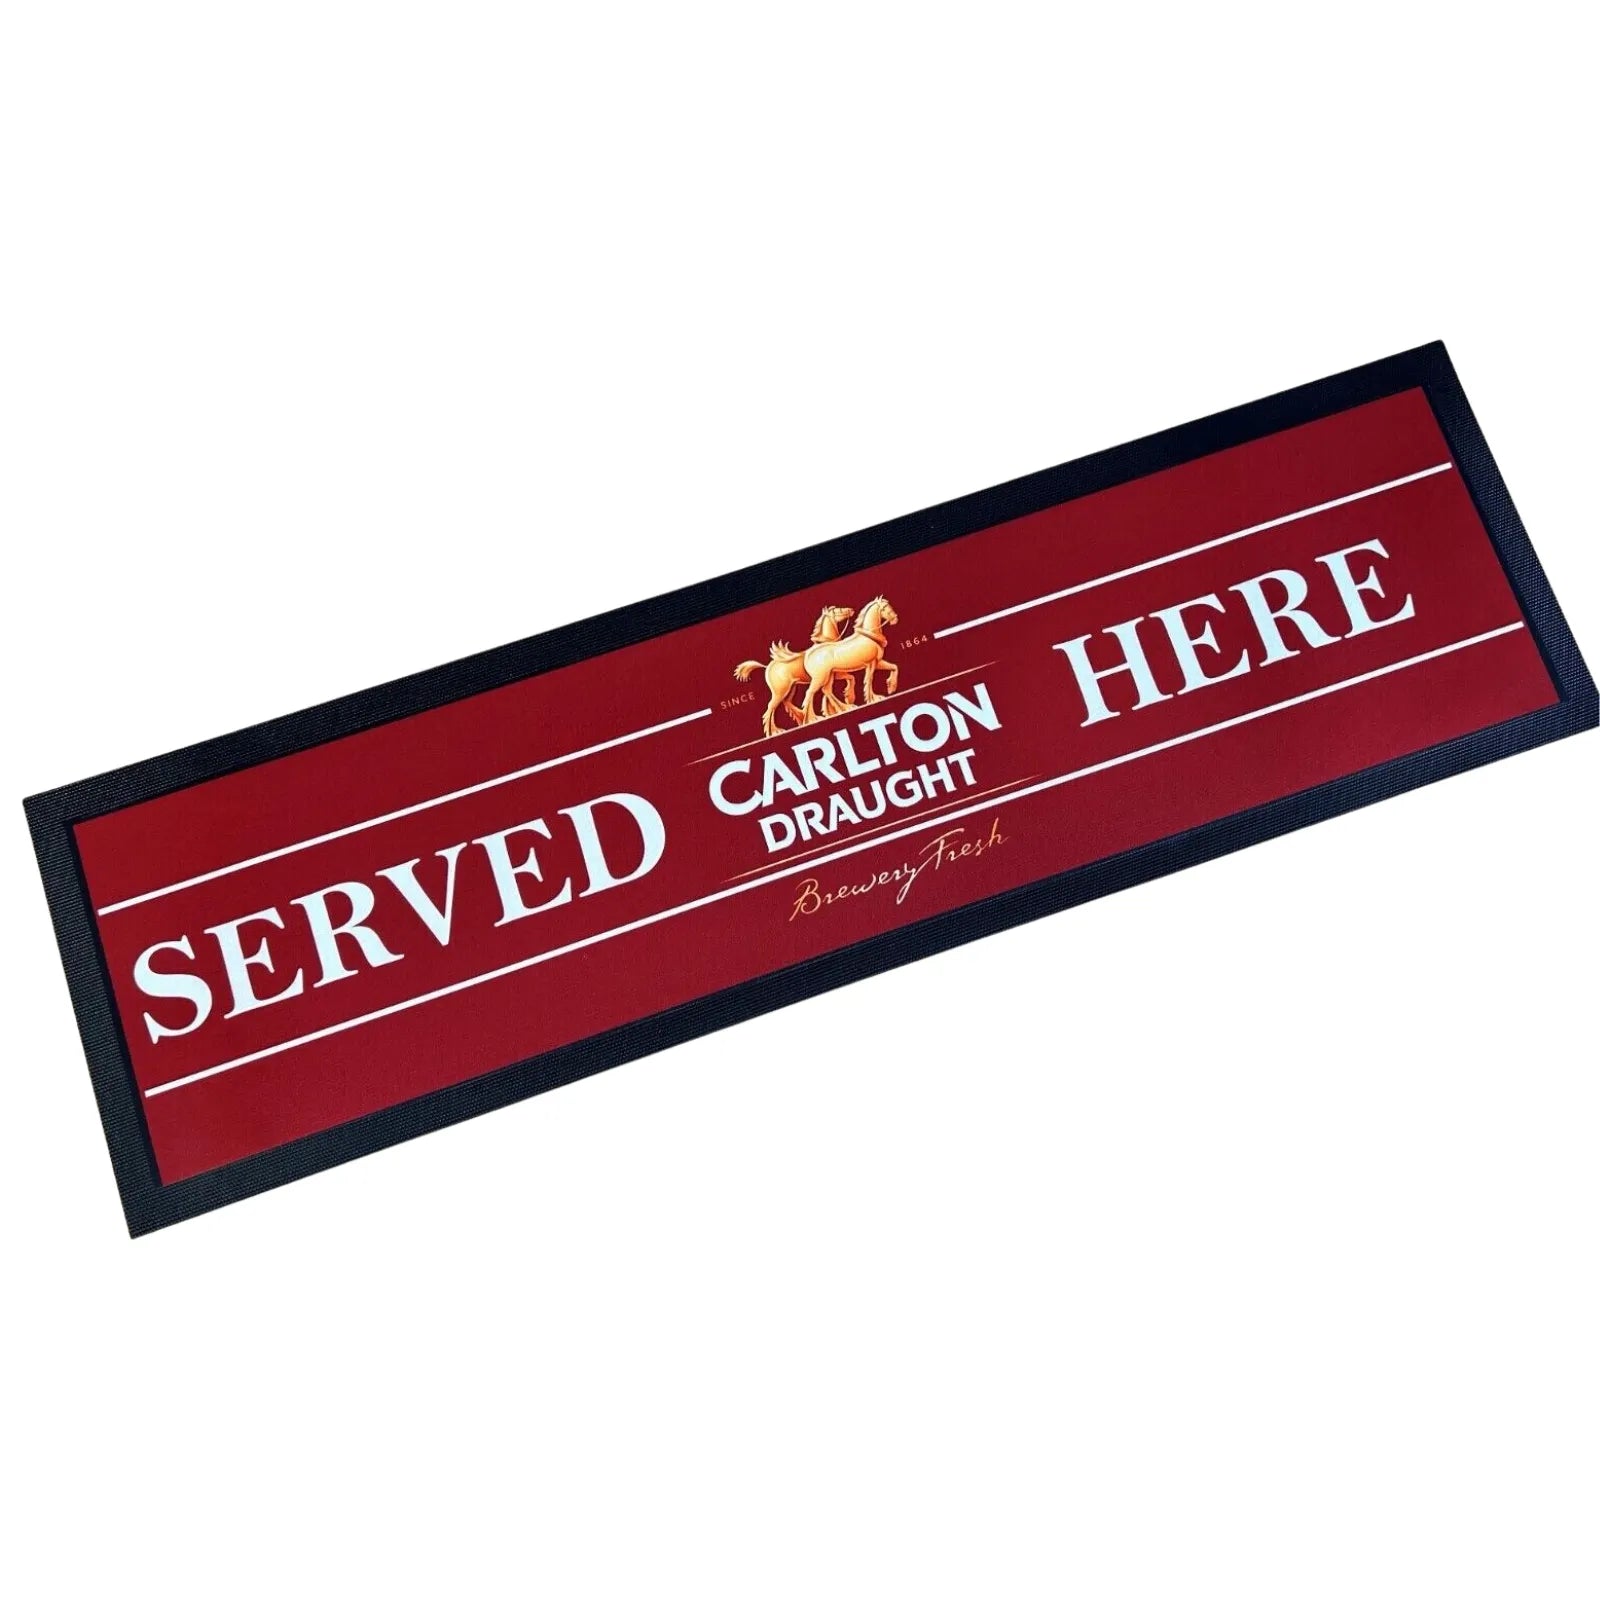 Carlton Draught Served Here Premium Rubber-Backed Bar Runner - KING CAVE